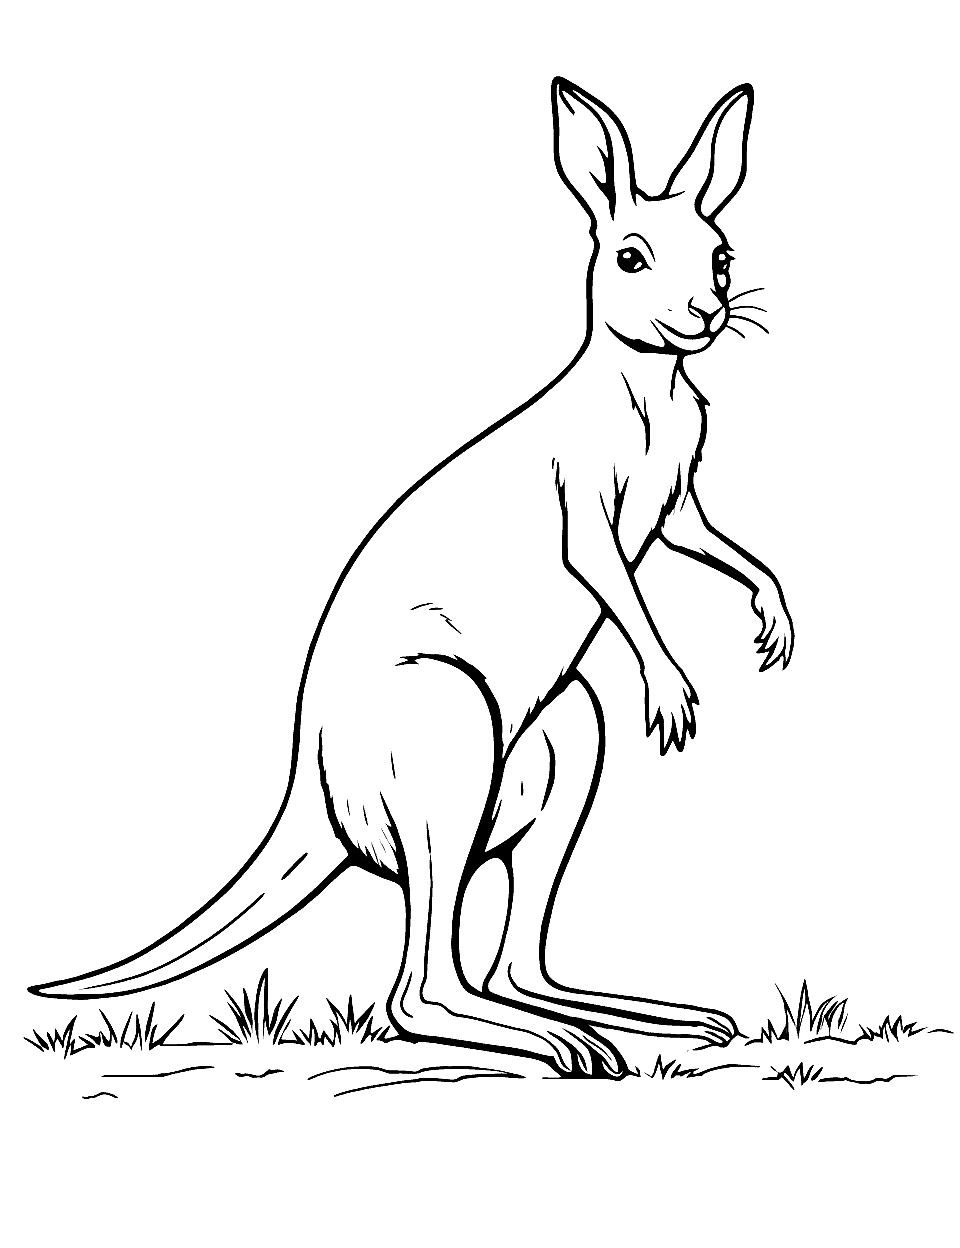 Happy Kangaroo Animal Coloring Page - A kangaroo hopping joyfully in the Australian outback.